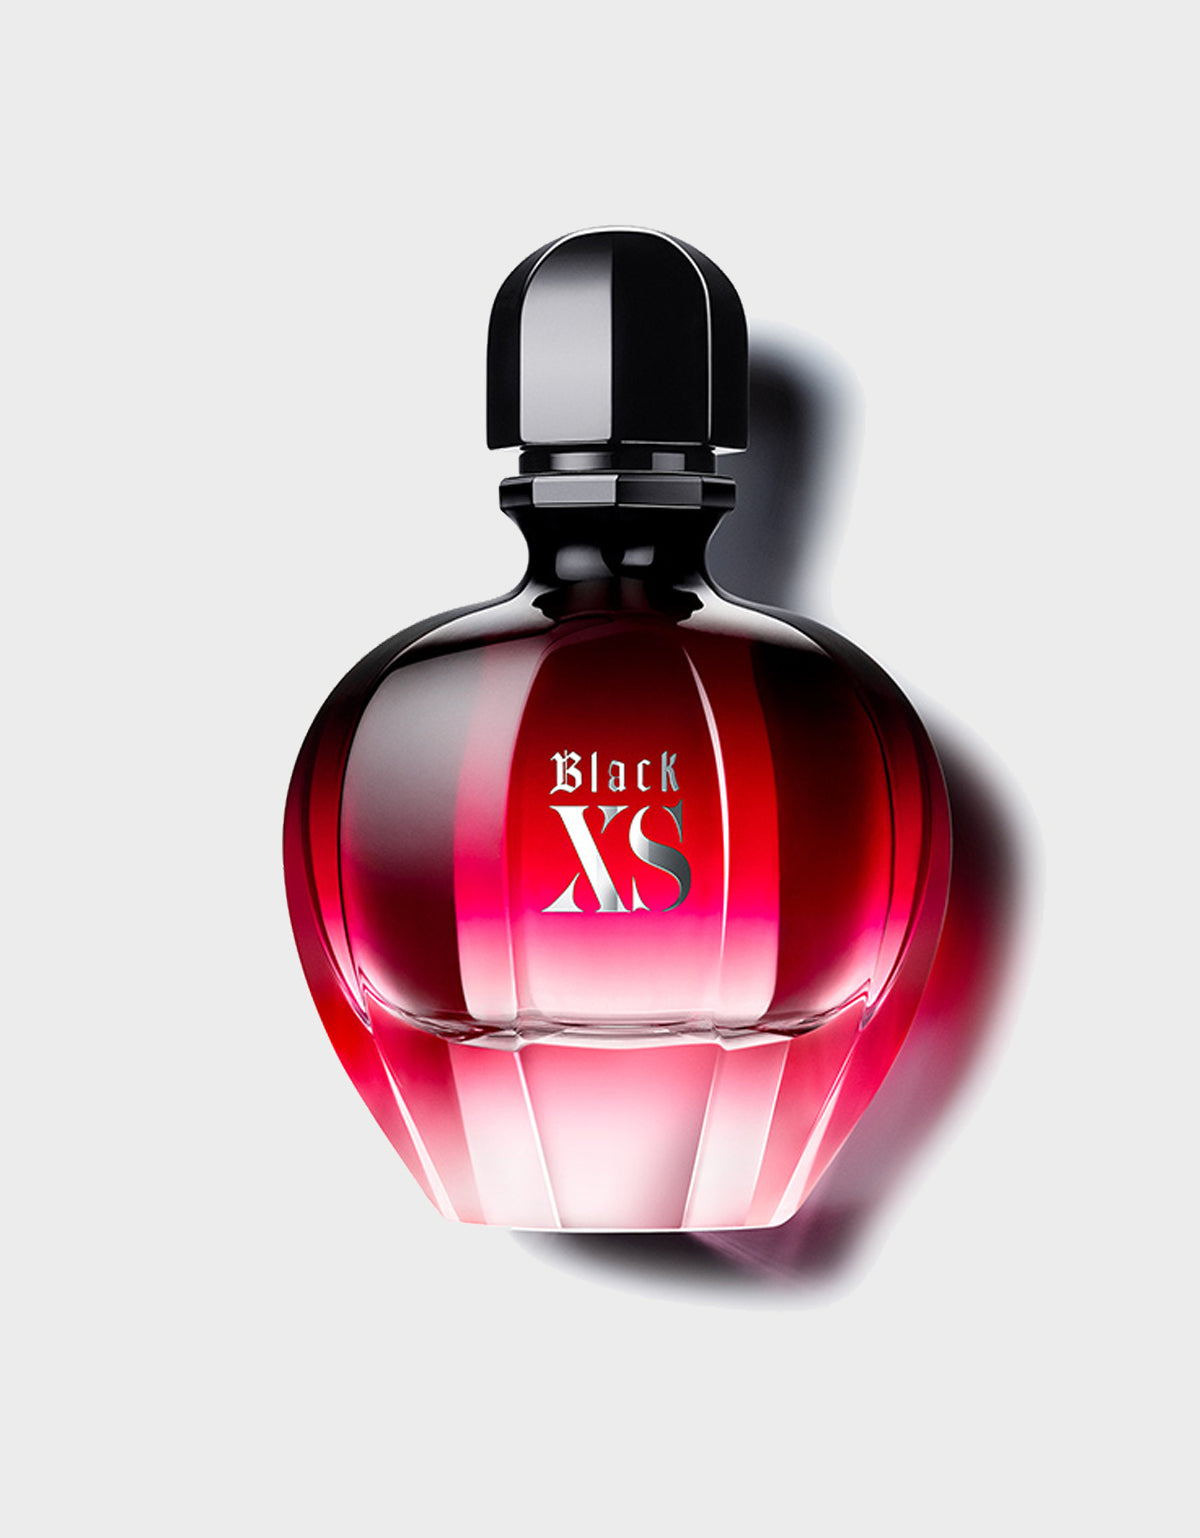 Black Xs Pour Elle by Paco Rabanne -Eau de Parfum- Online in UAE - Zahaar